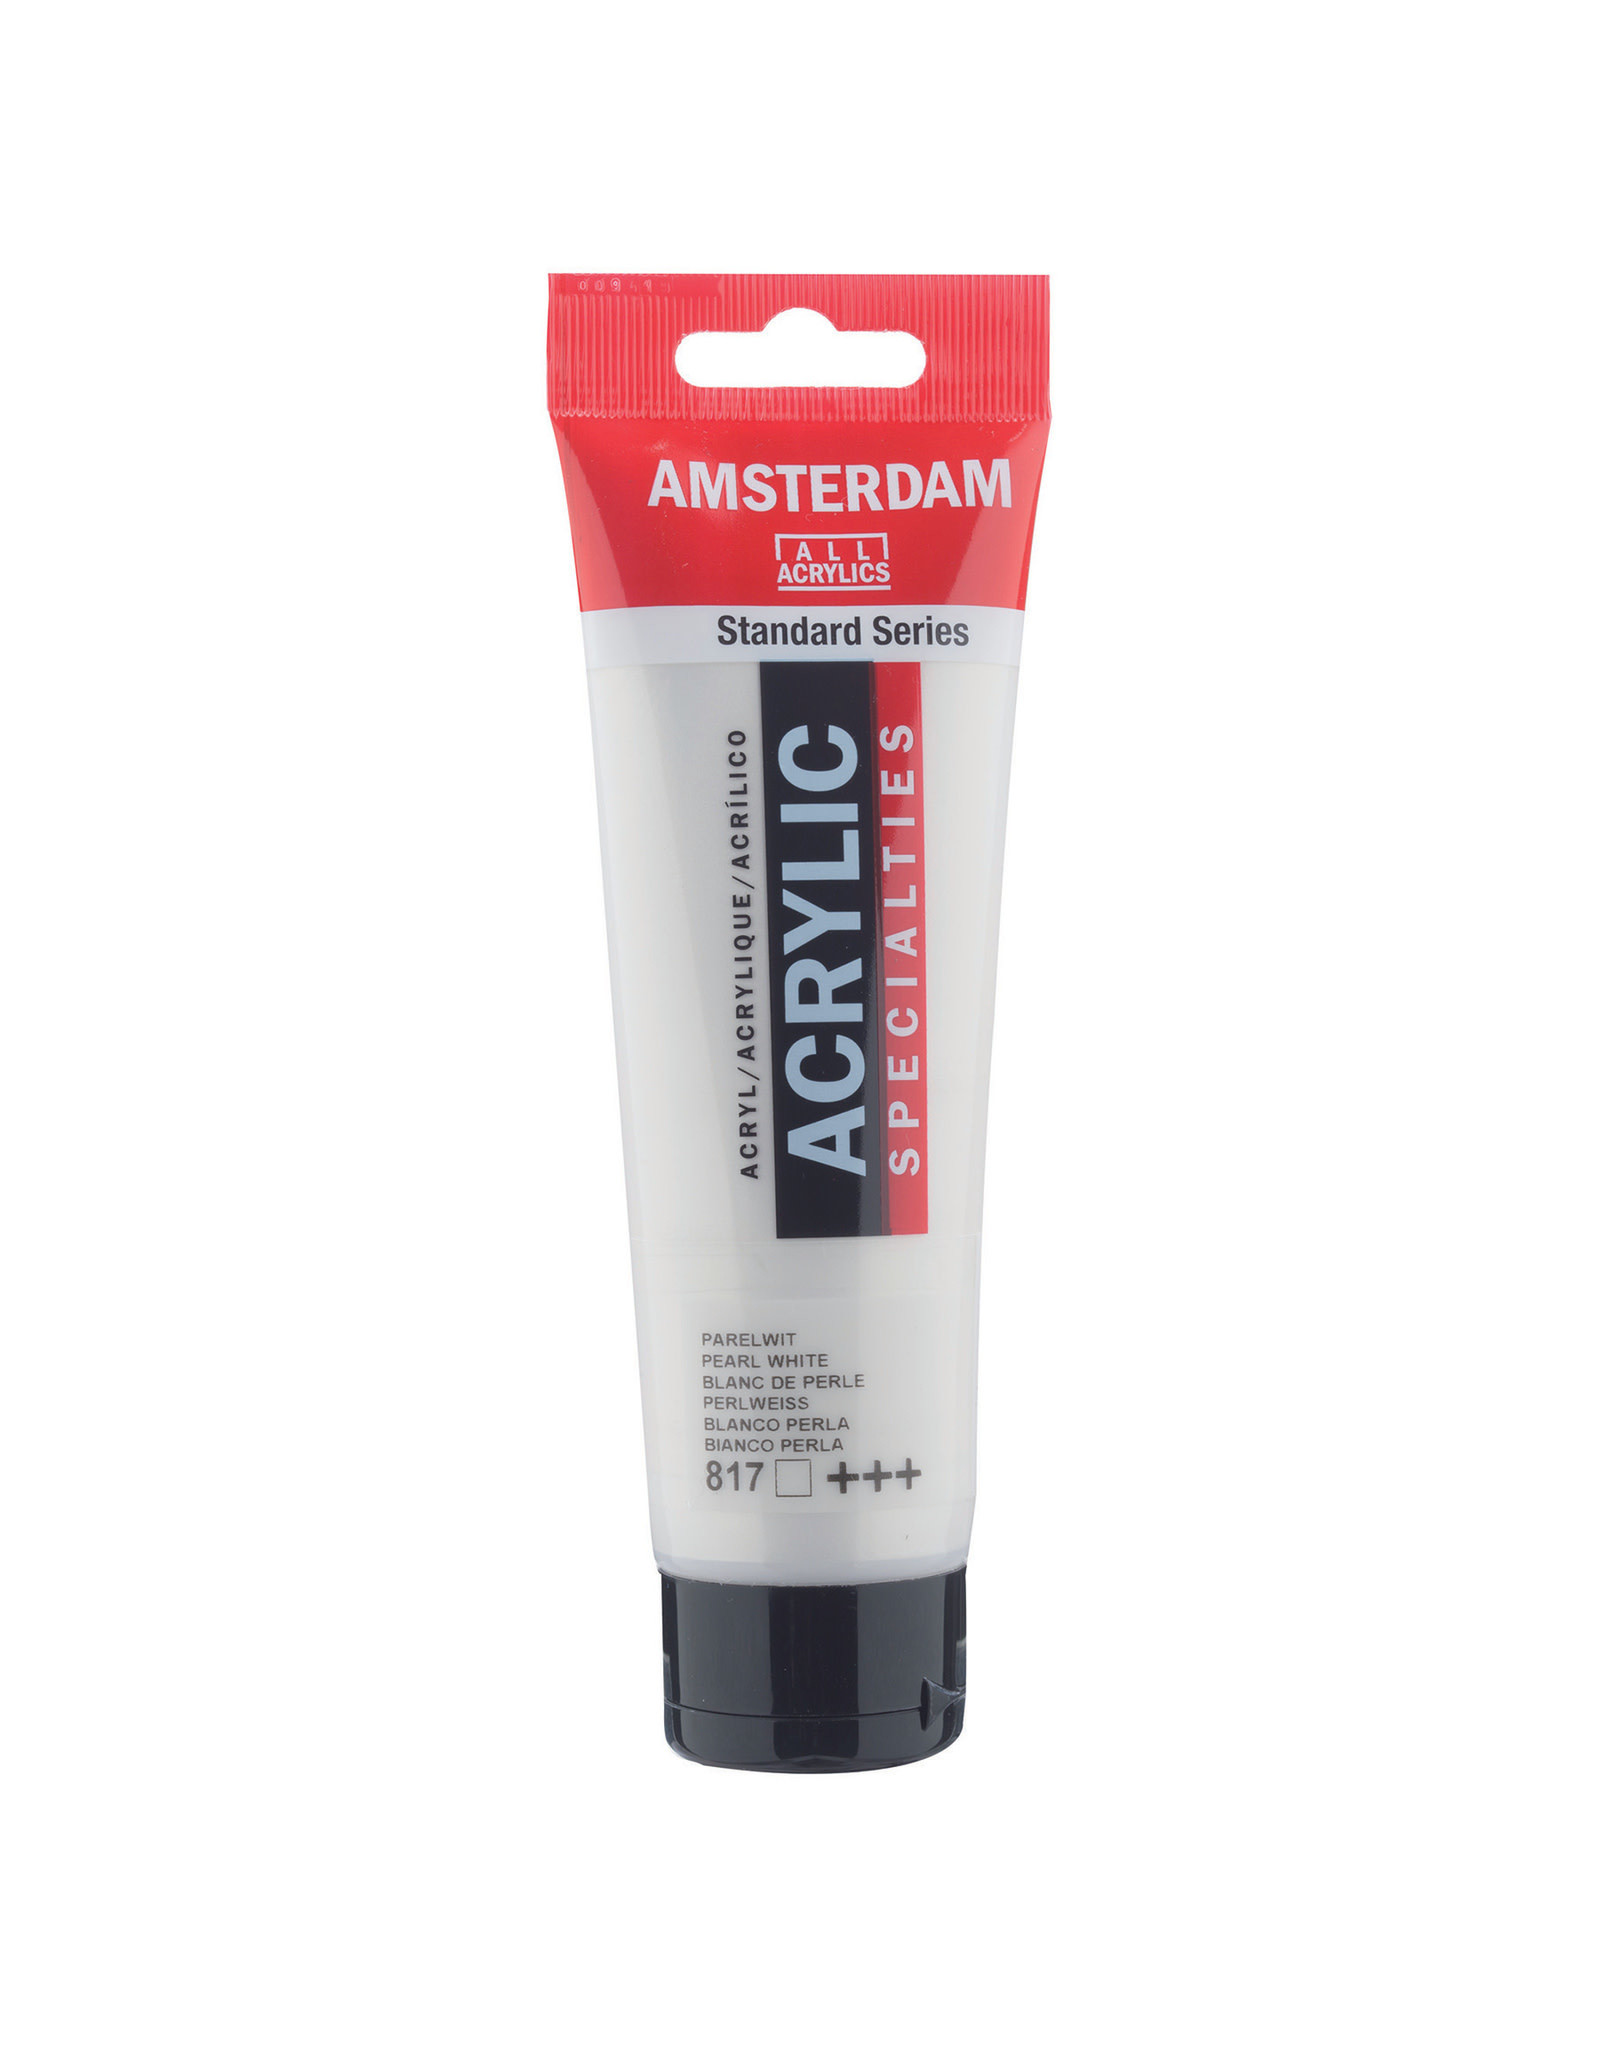 Royal Talens Amsterdam Standard Acrylic, Pearl White 120ml